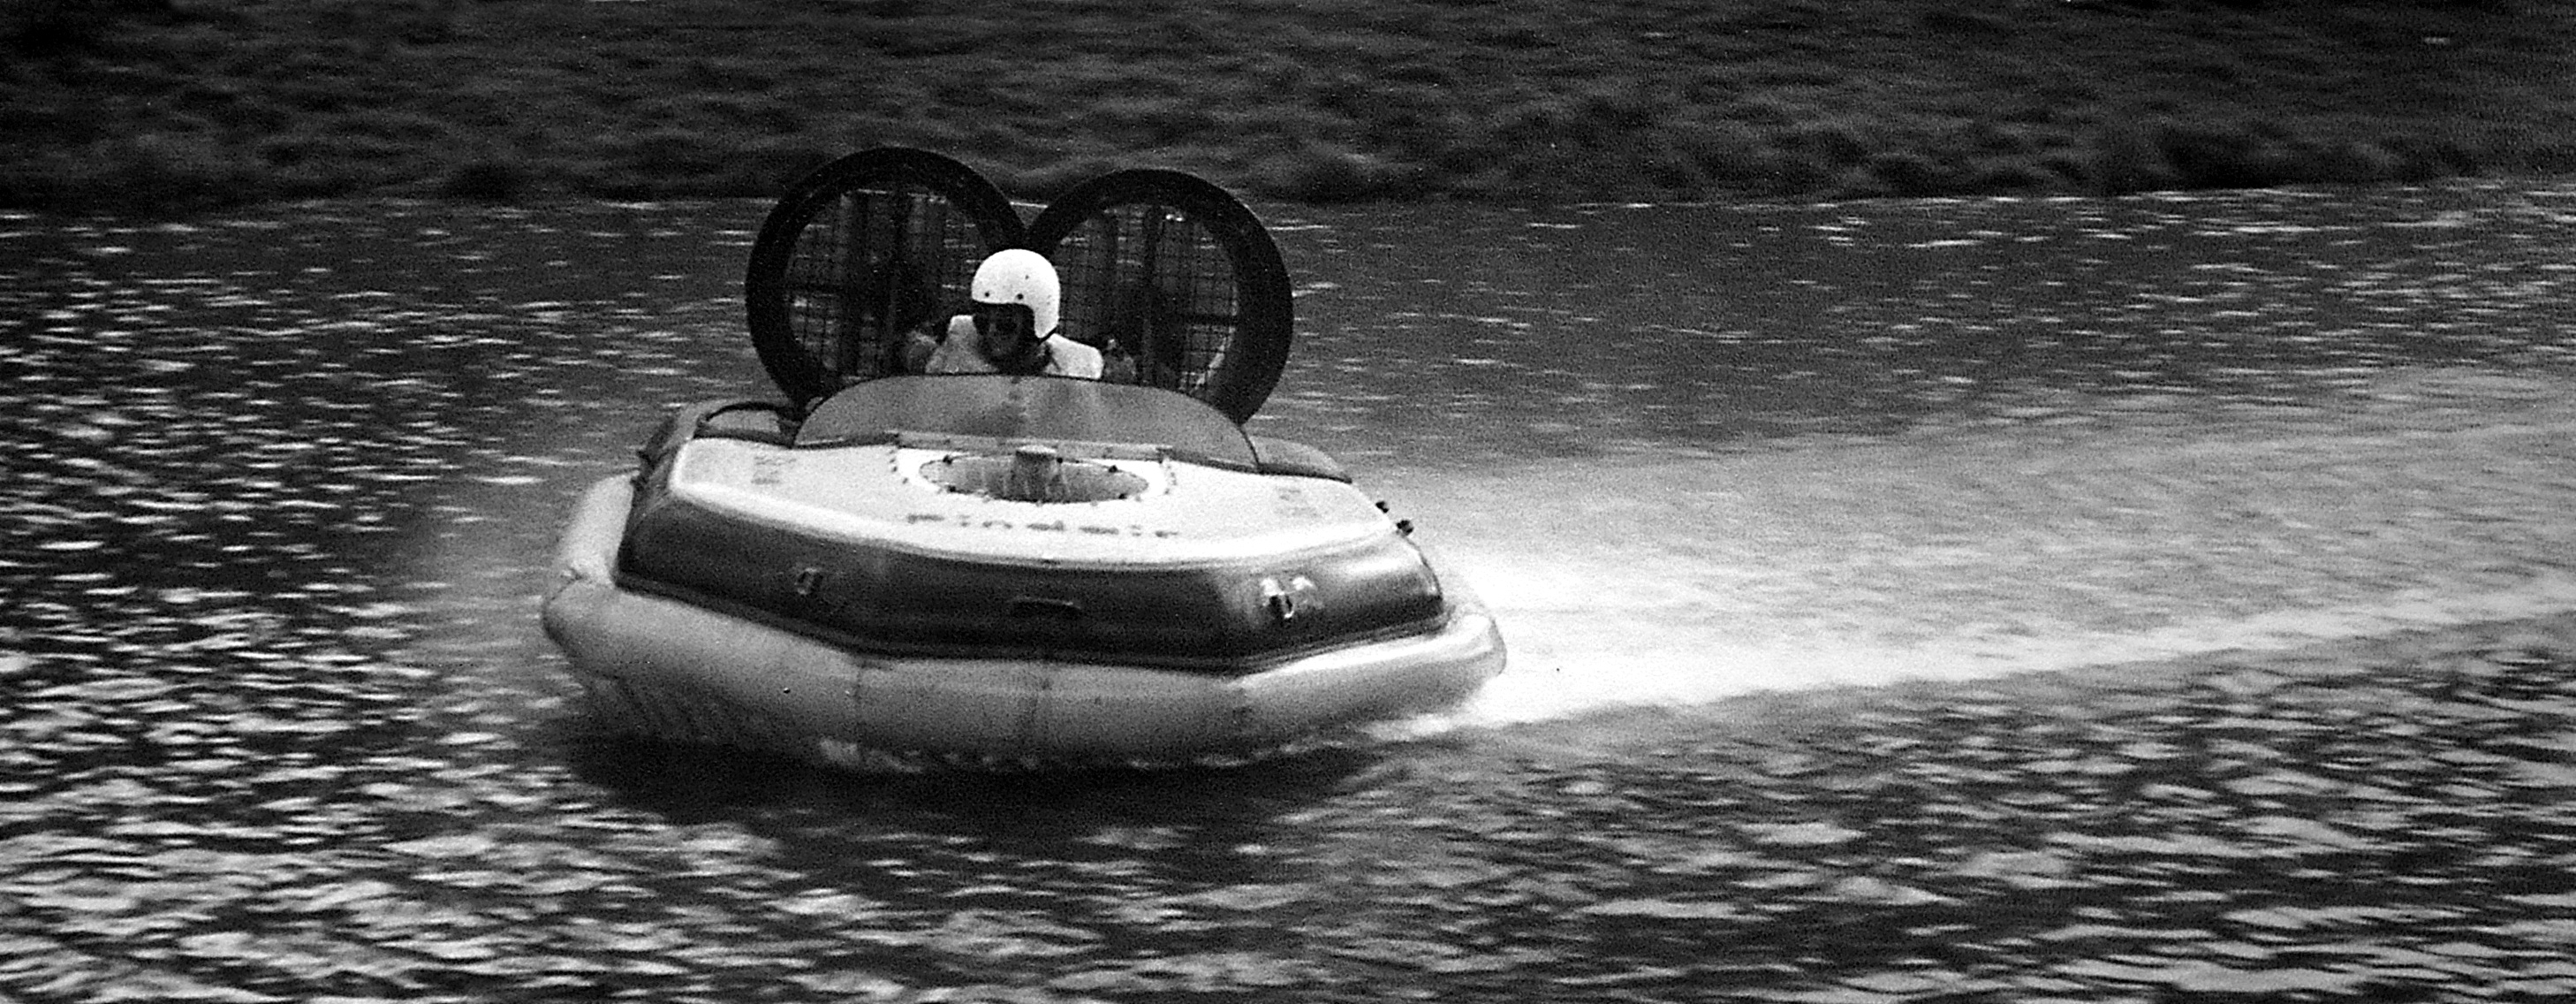 26th. September 1975 Barry Oakley in Pindair Skima hovercraft at Doddington rally